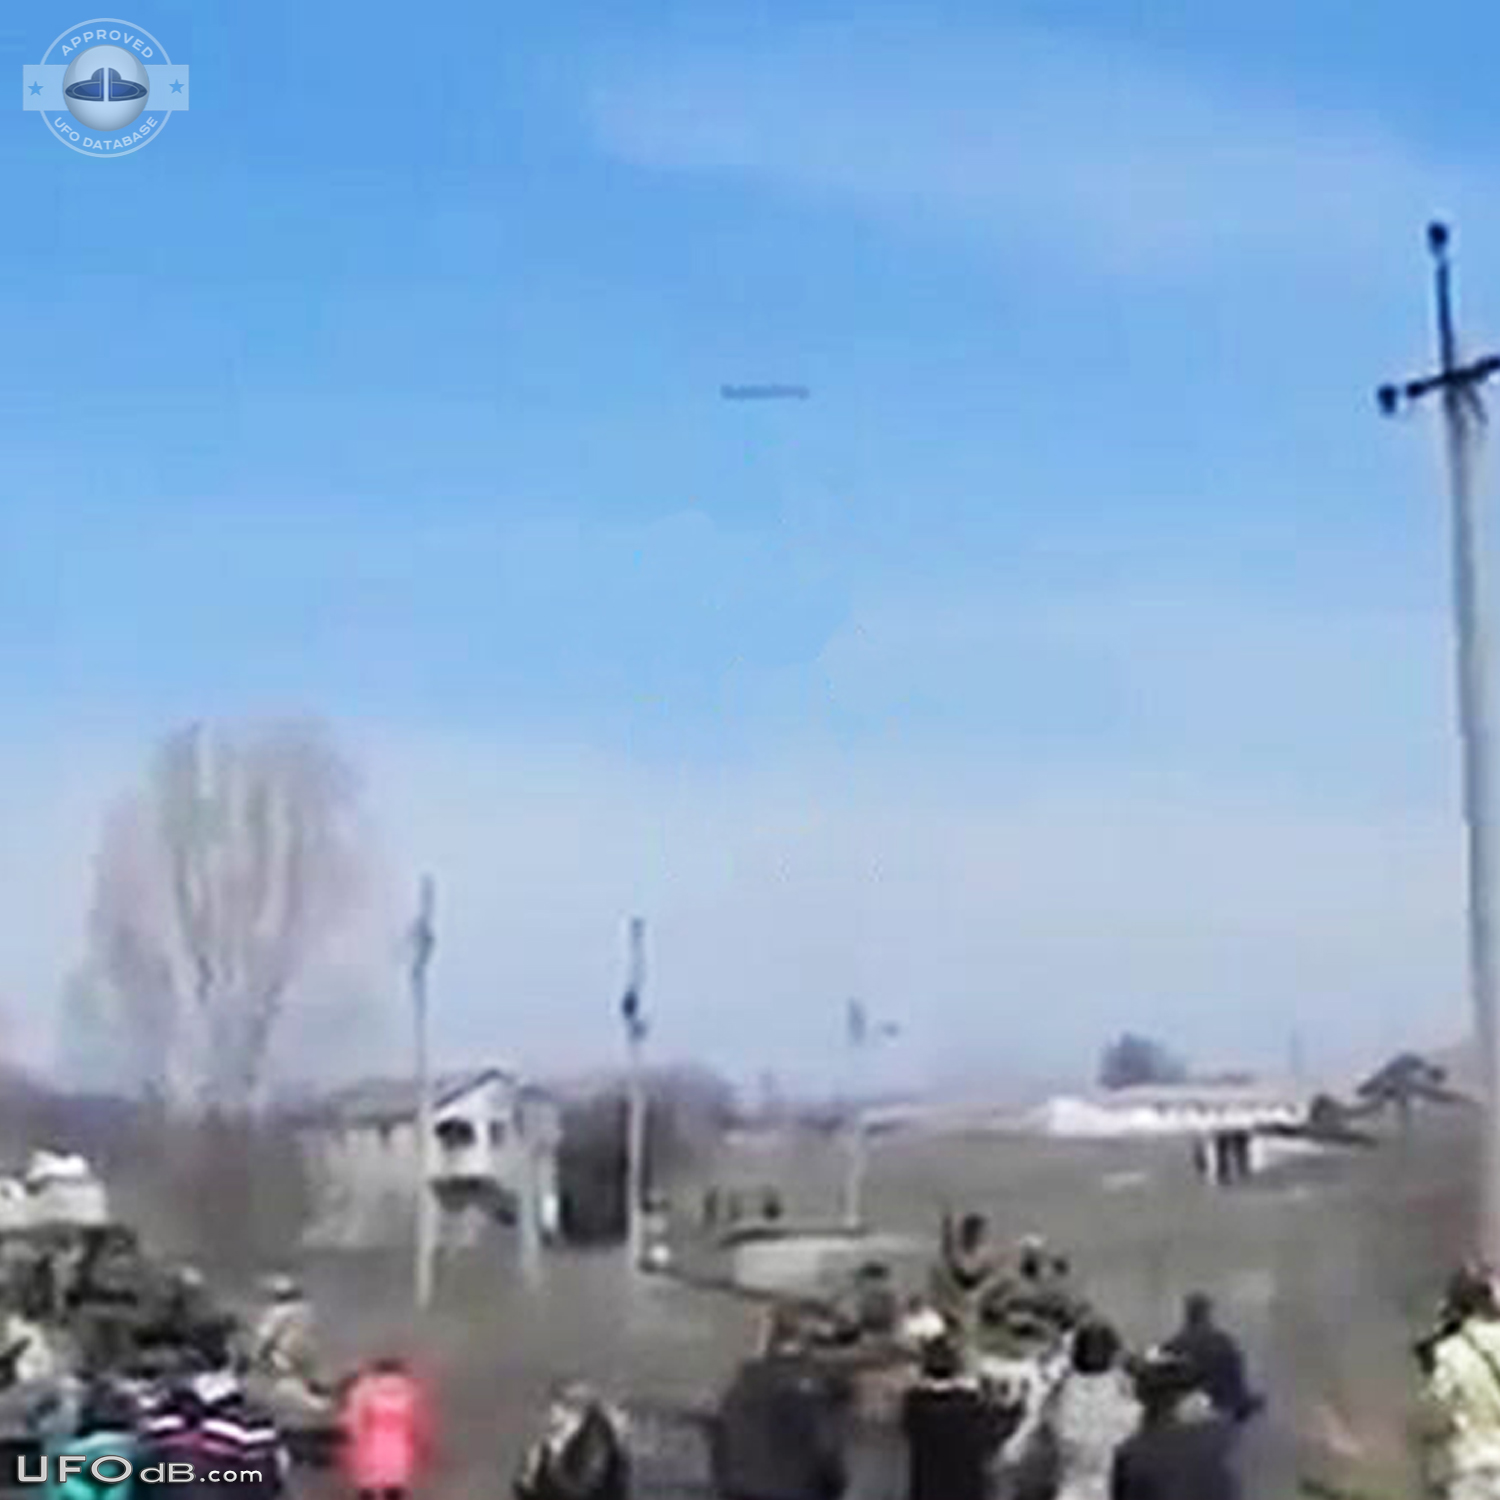 300 M Cylinder UFO Sky Dreadnaught near Russia/Ukraine Conflict - 2014 UFO Picture #559-3